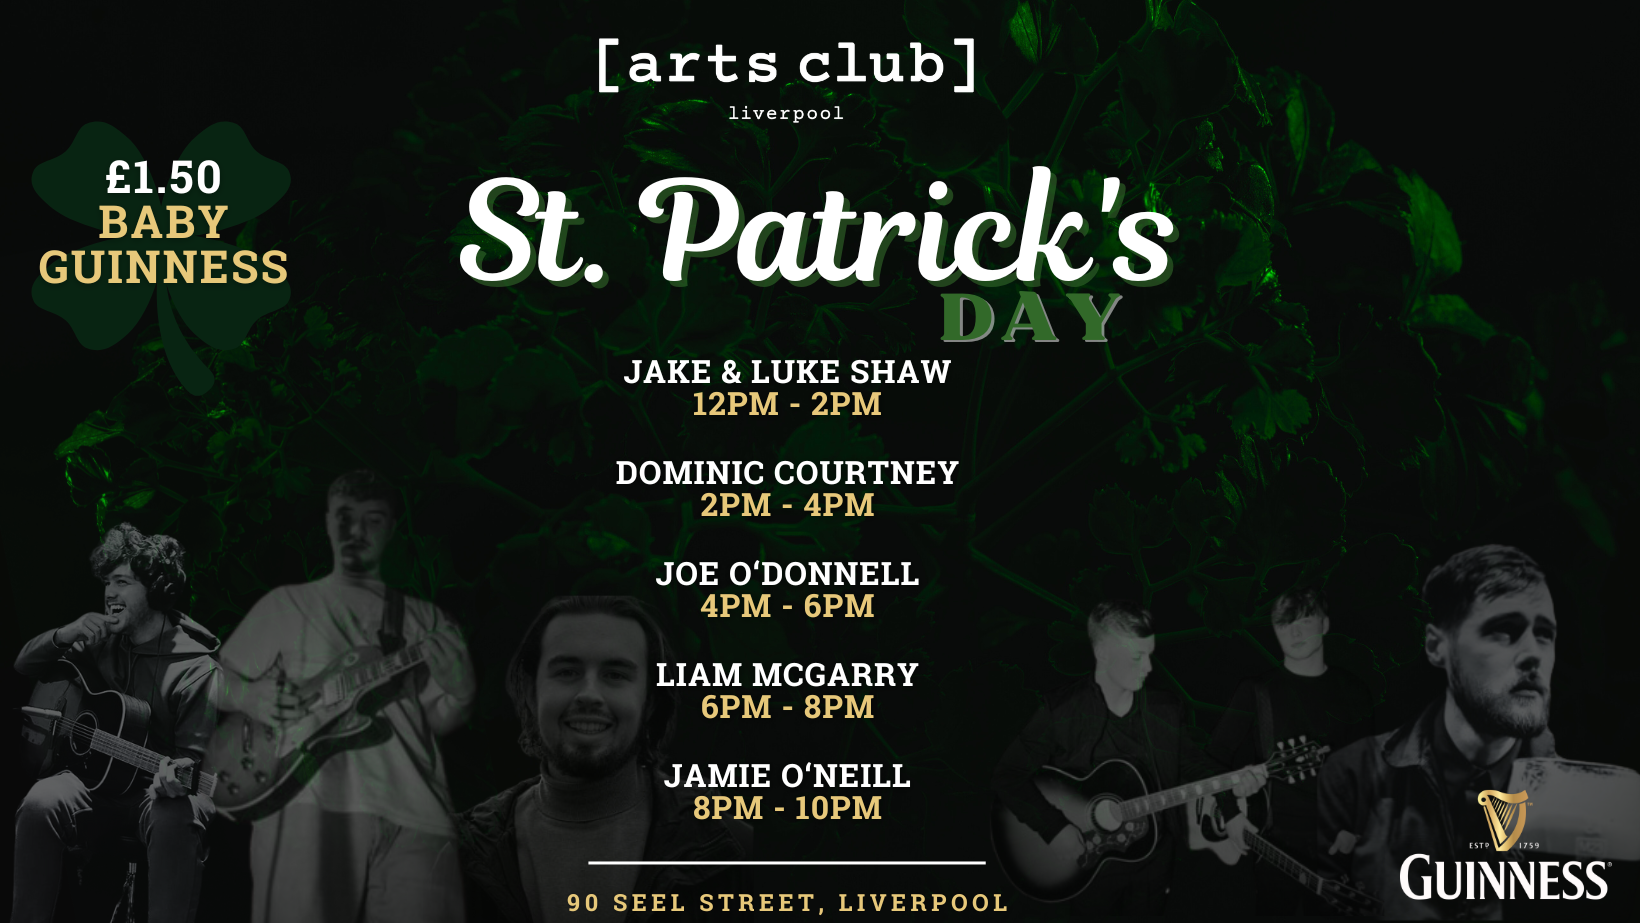 St Patrick’s Day @ [Arts Club]